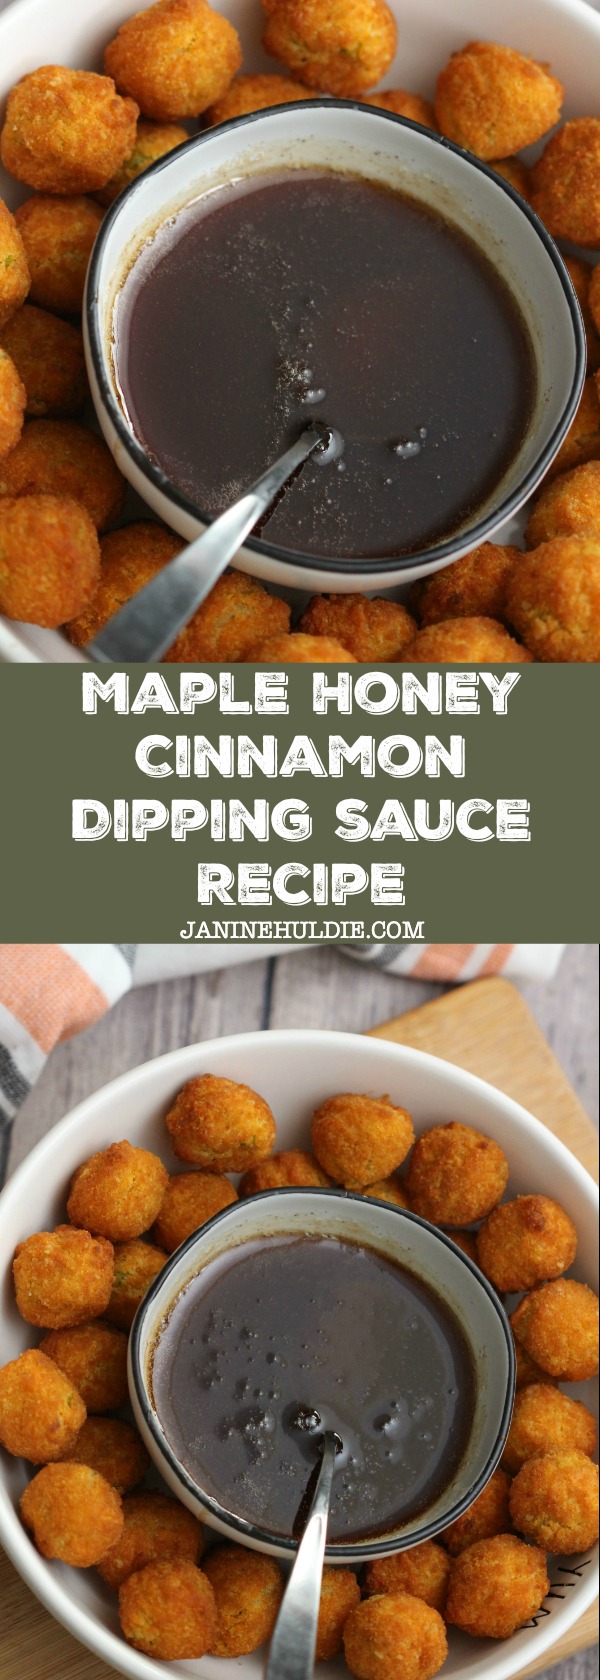 Maple Cinnamon Dipping Sauce Recipe